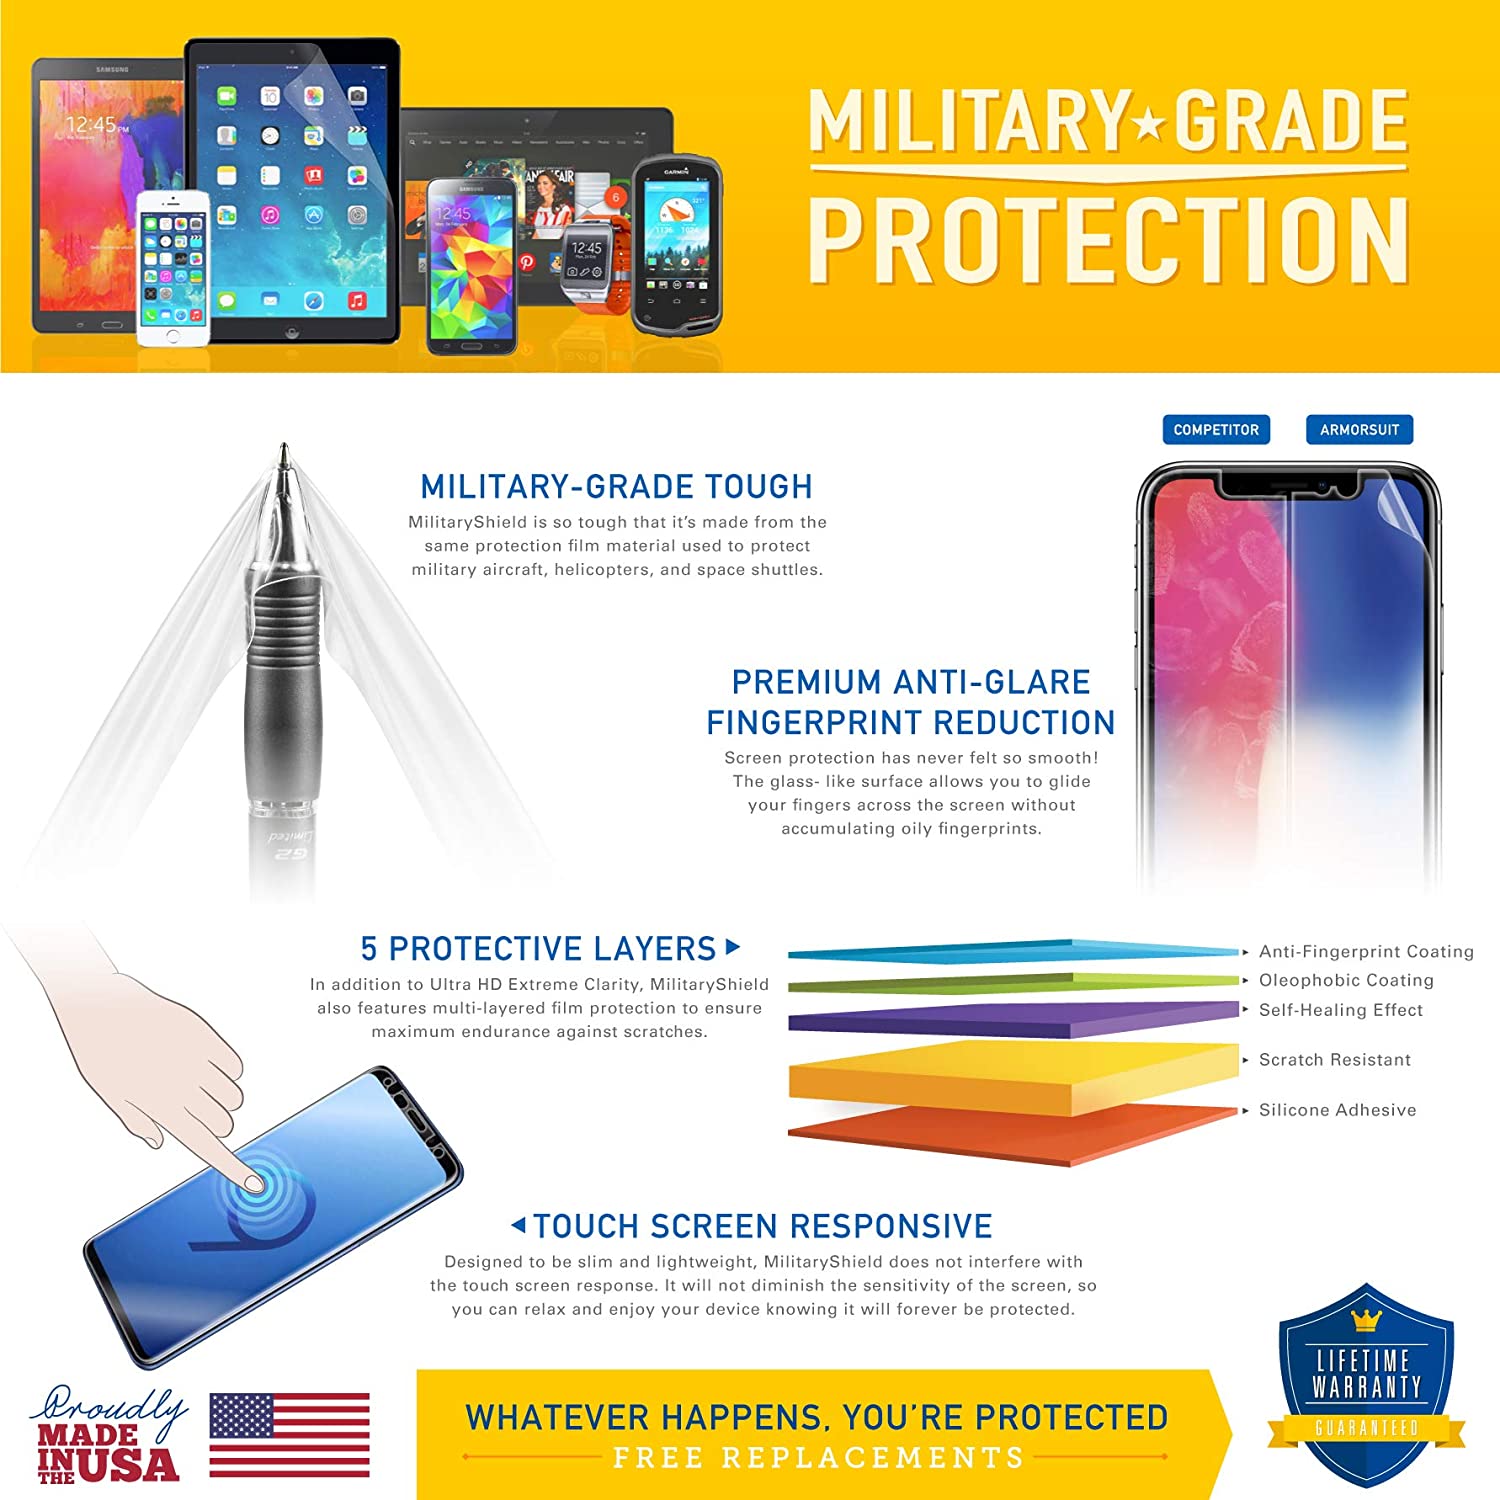 Samsung AT&T Galaxy Note Screen Protector + Carbon Fiber Skin Protector